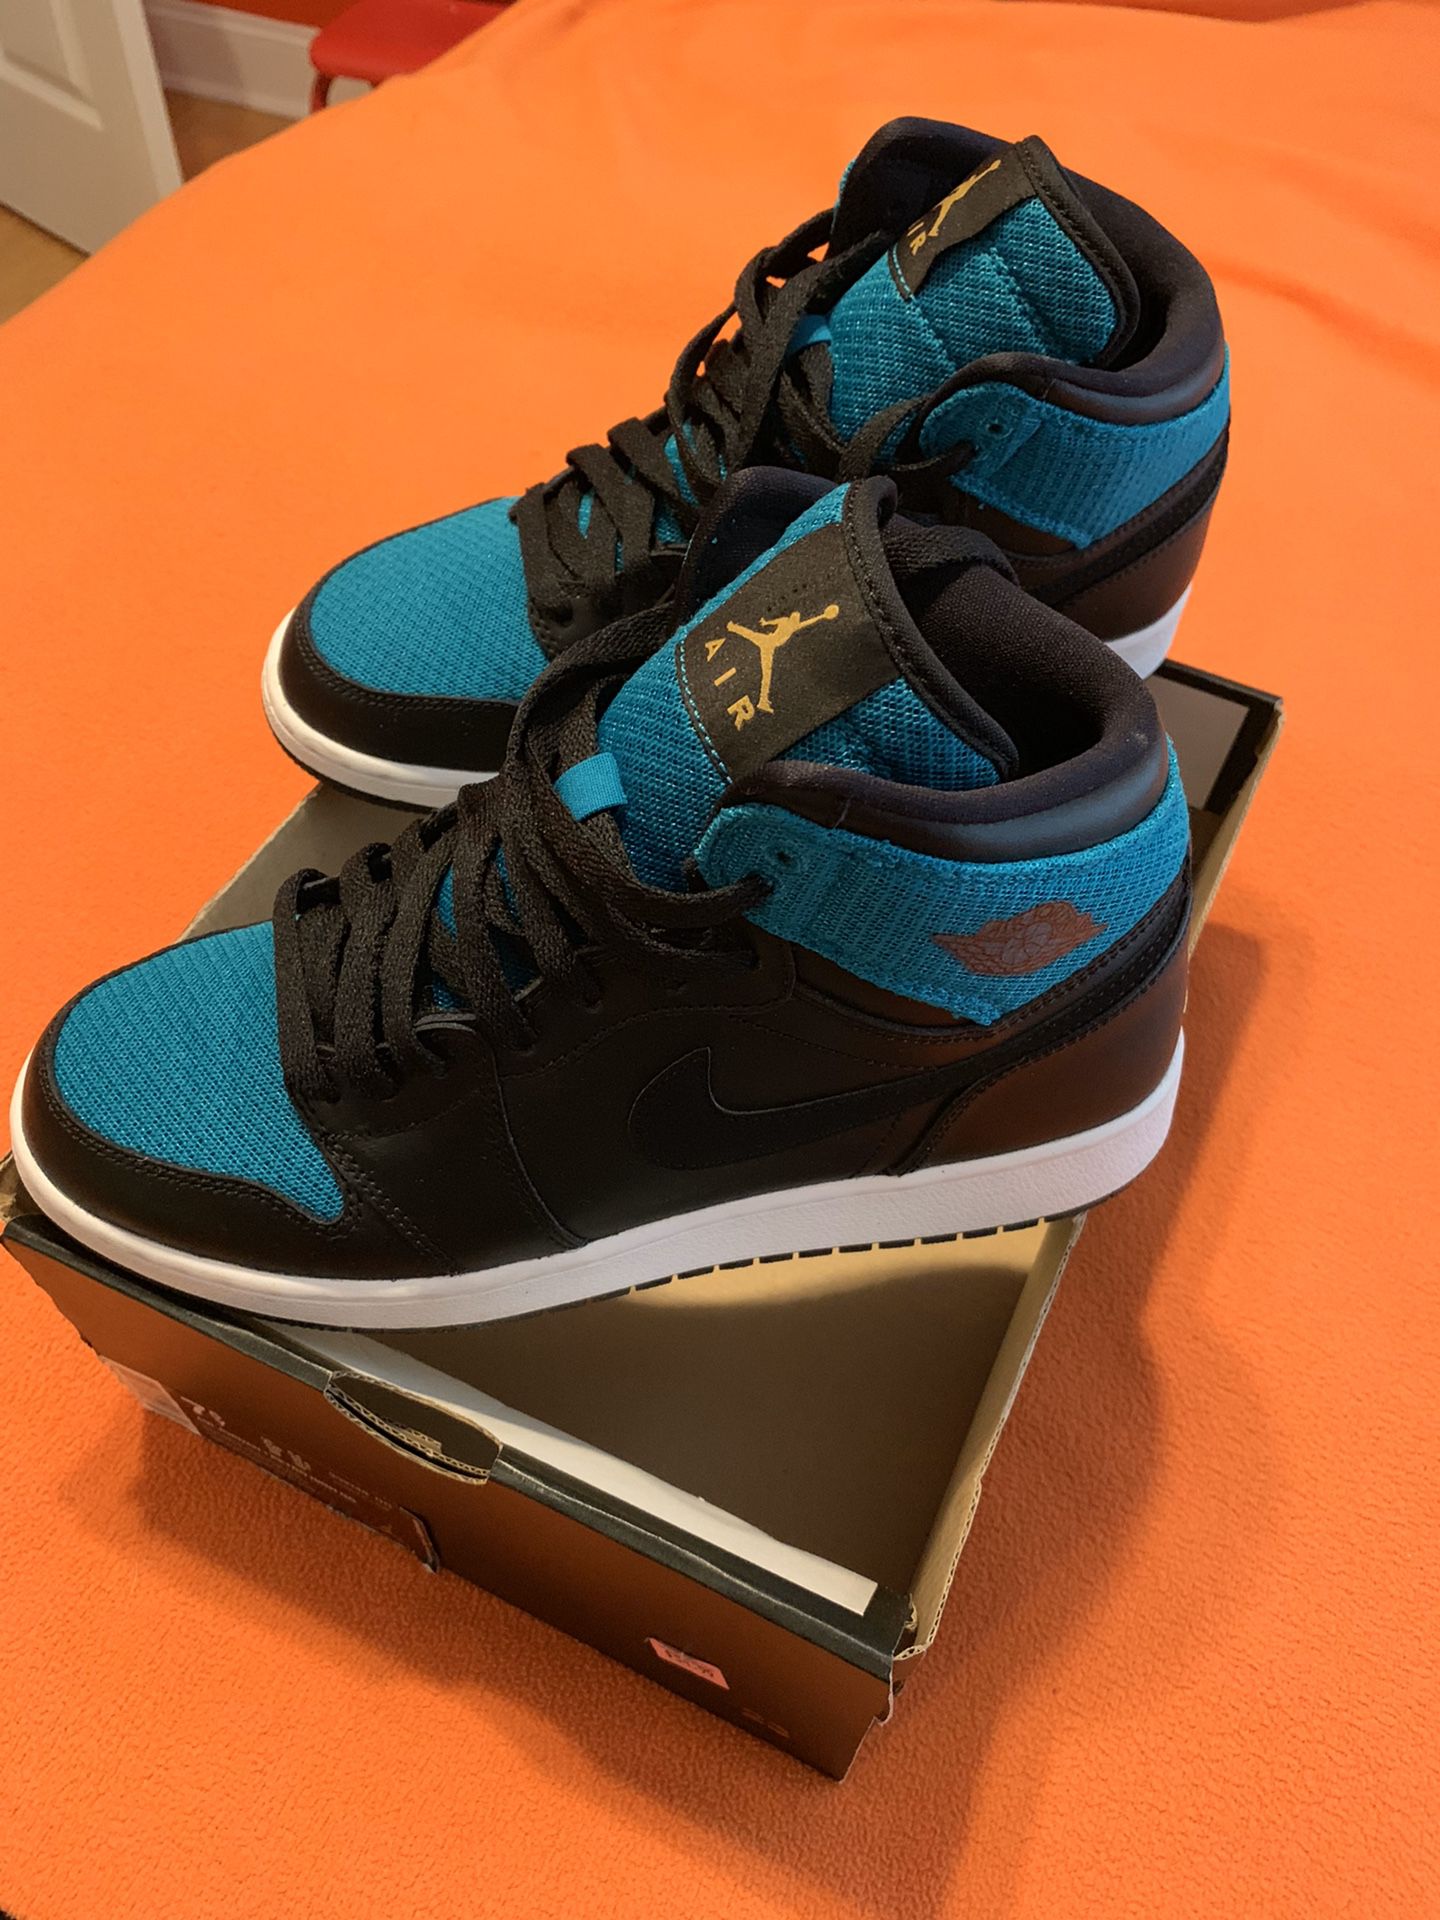 Nike Air Jordan 1’s